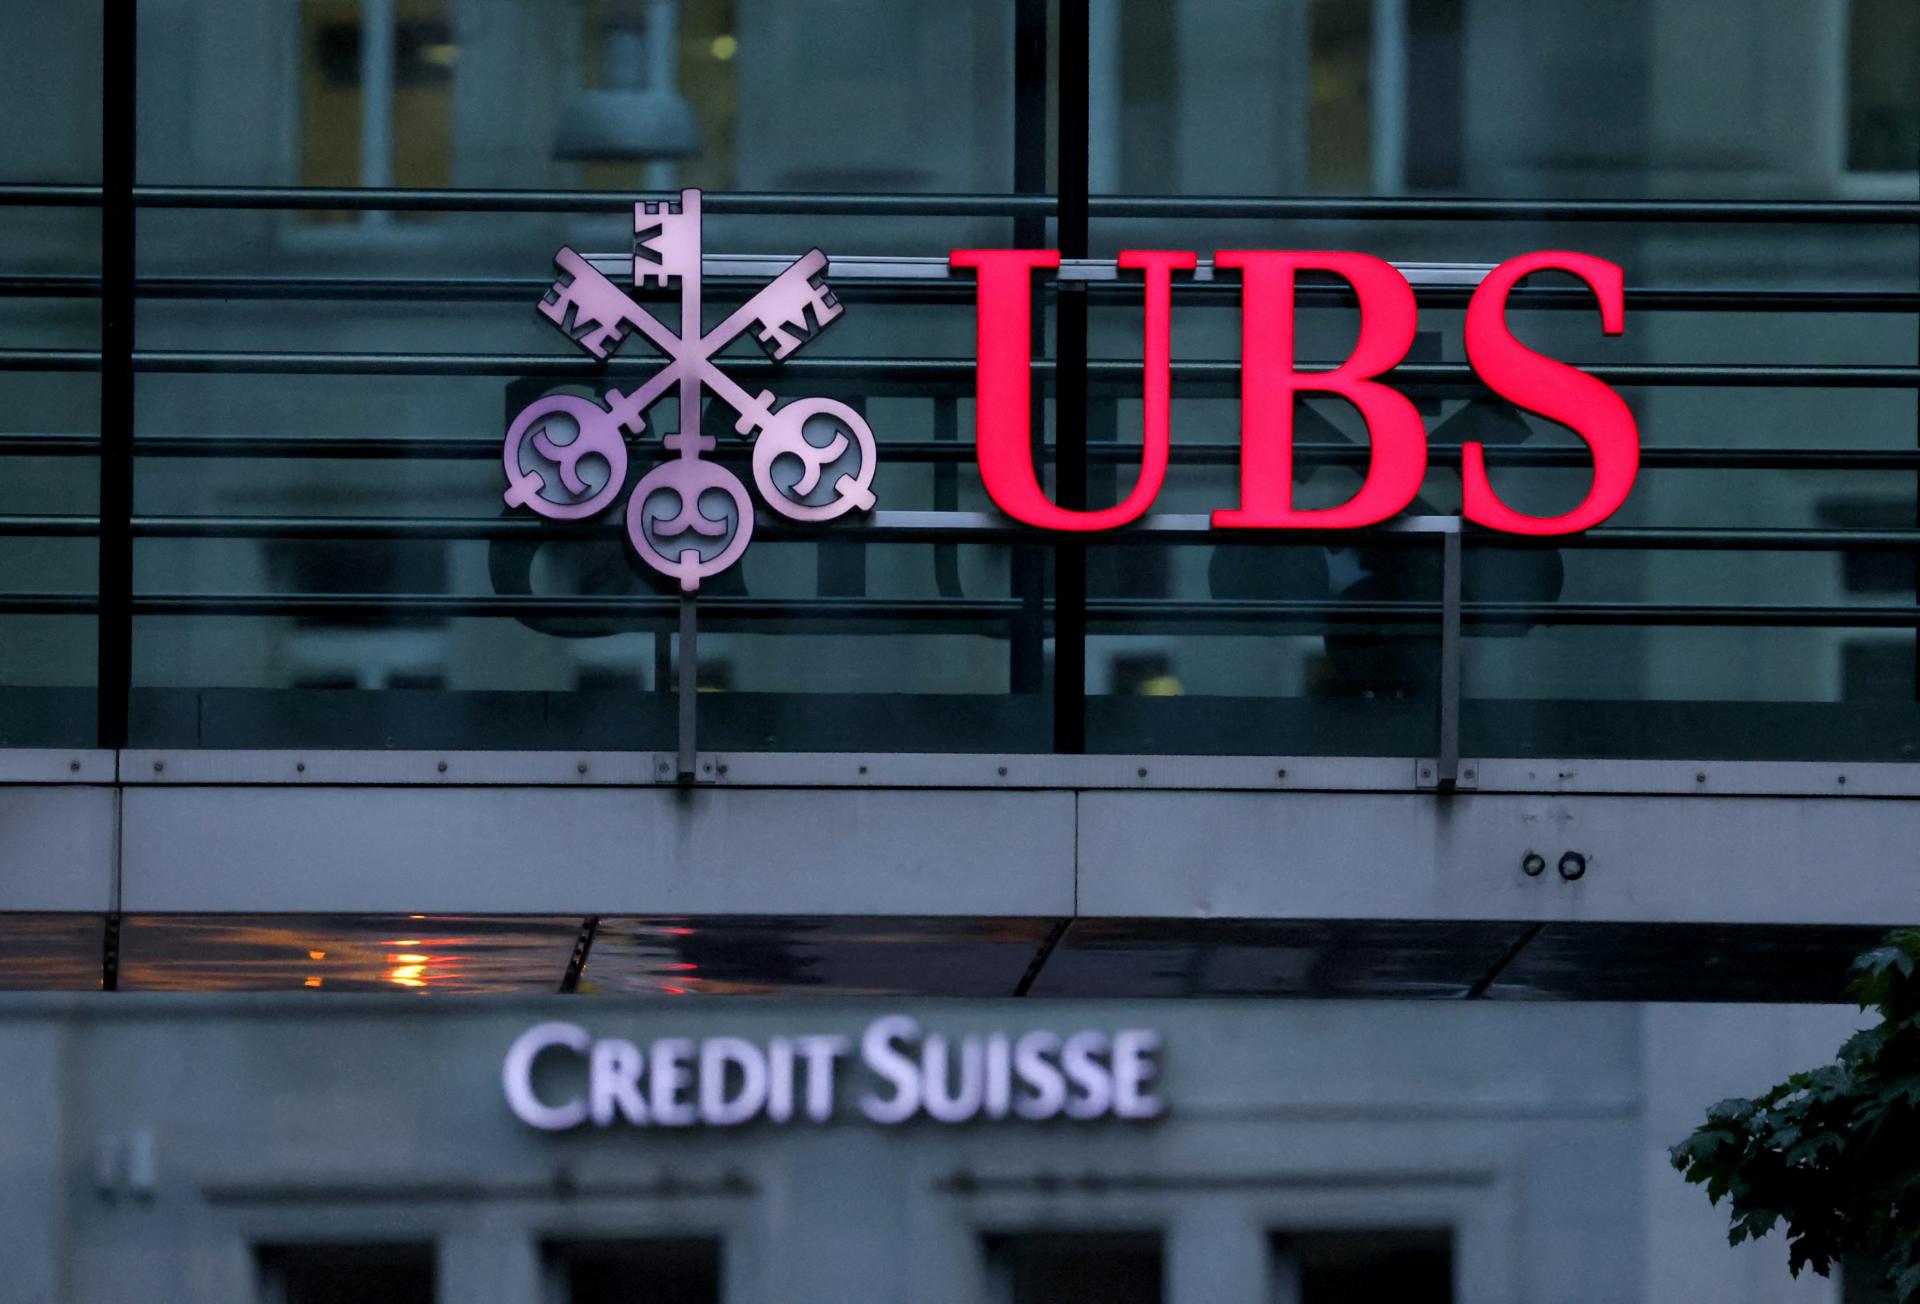 UBS úplne začlení Credit Suisse do svojich aktivít. Prevzatie konkurenta prinieslo rekordné zisky